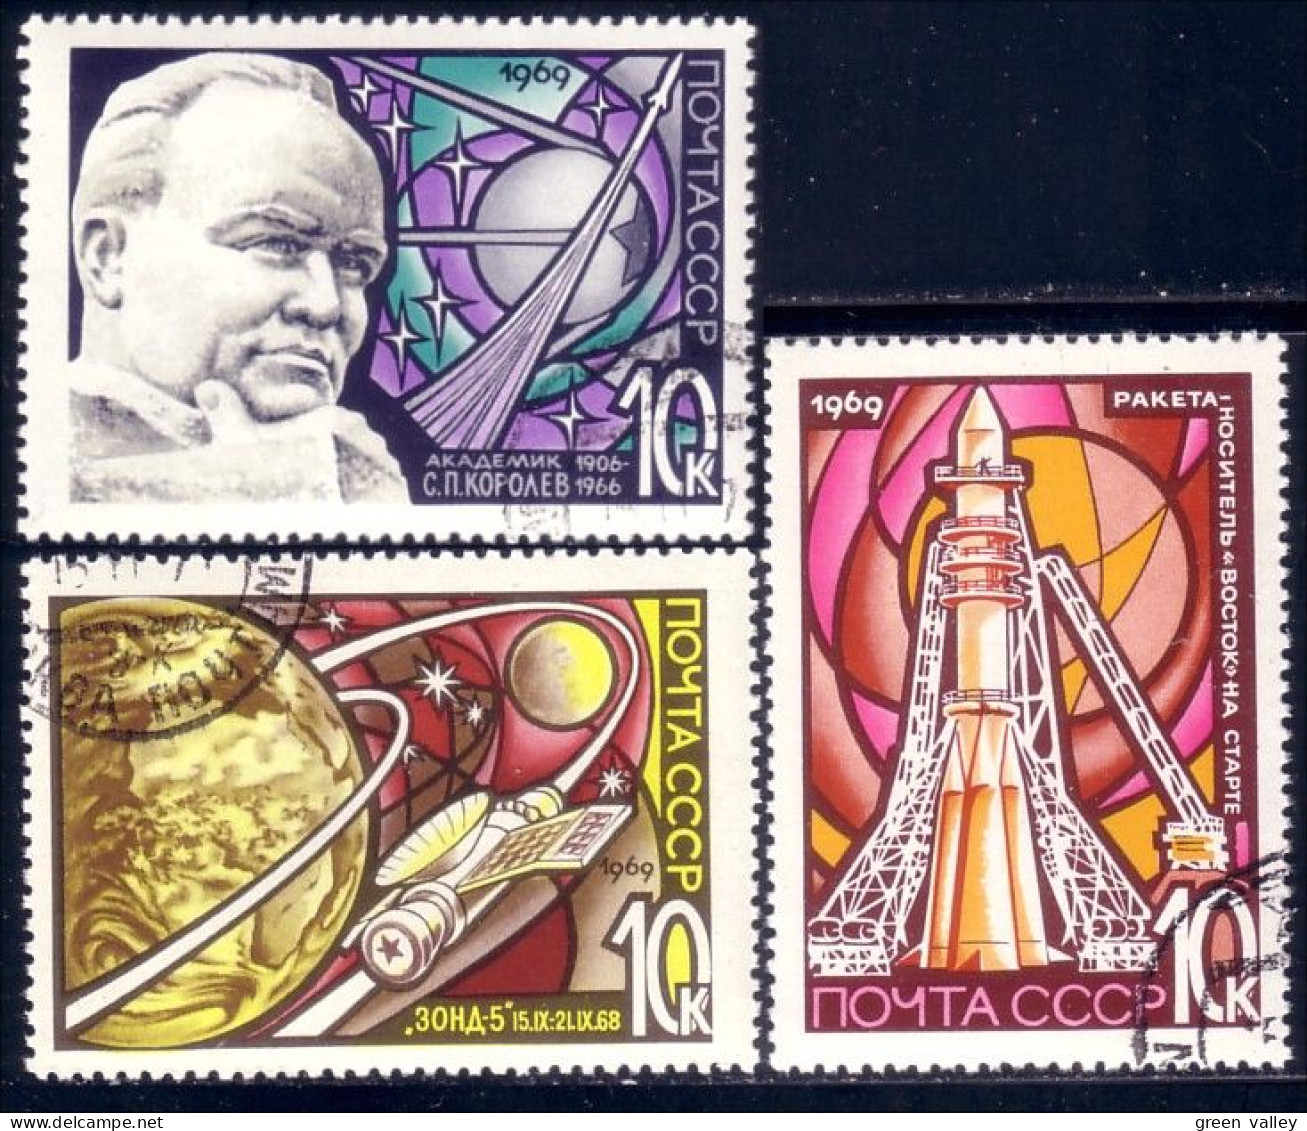 773 Russie 1969 Espace Space Exploration (RUK-149) - Russia & USSR